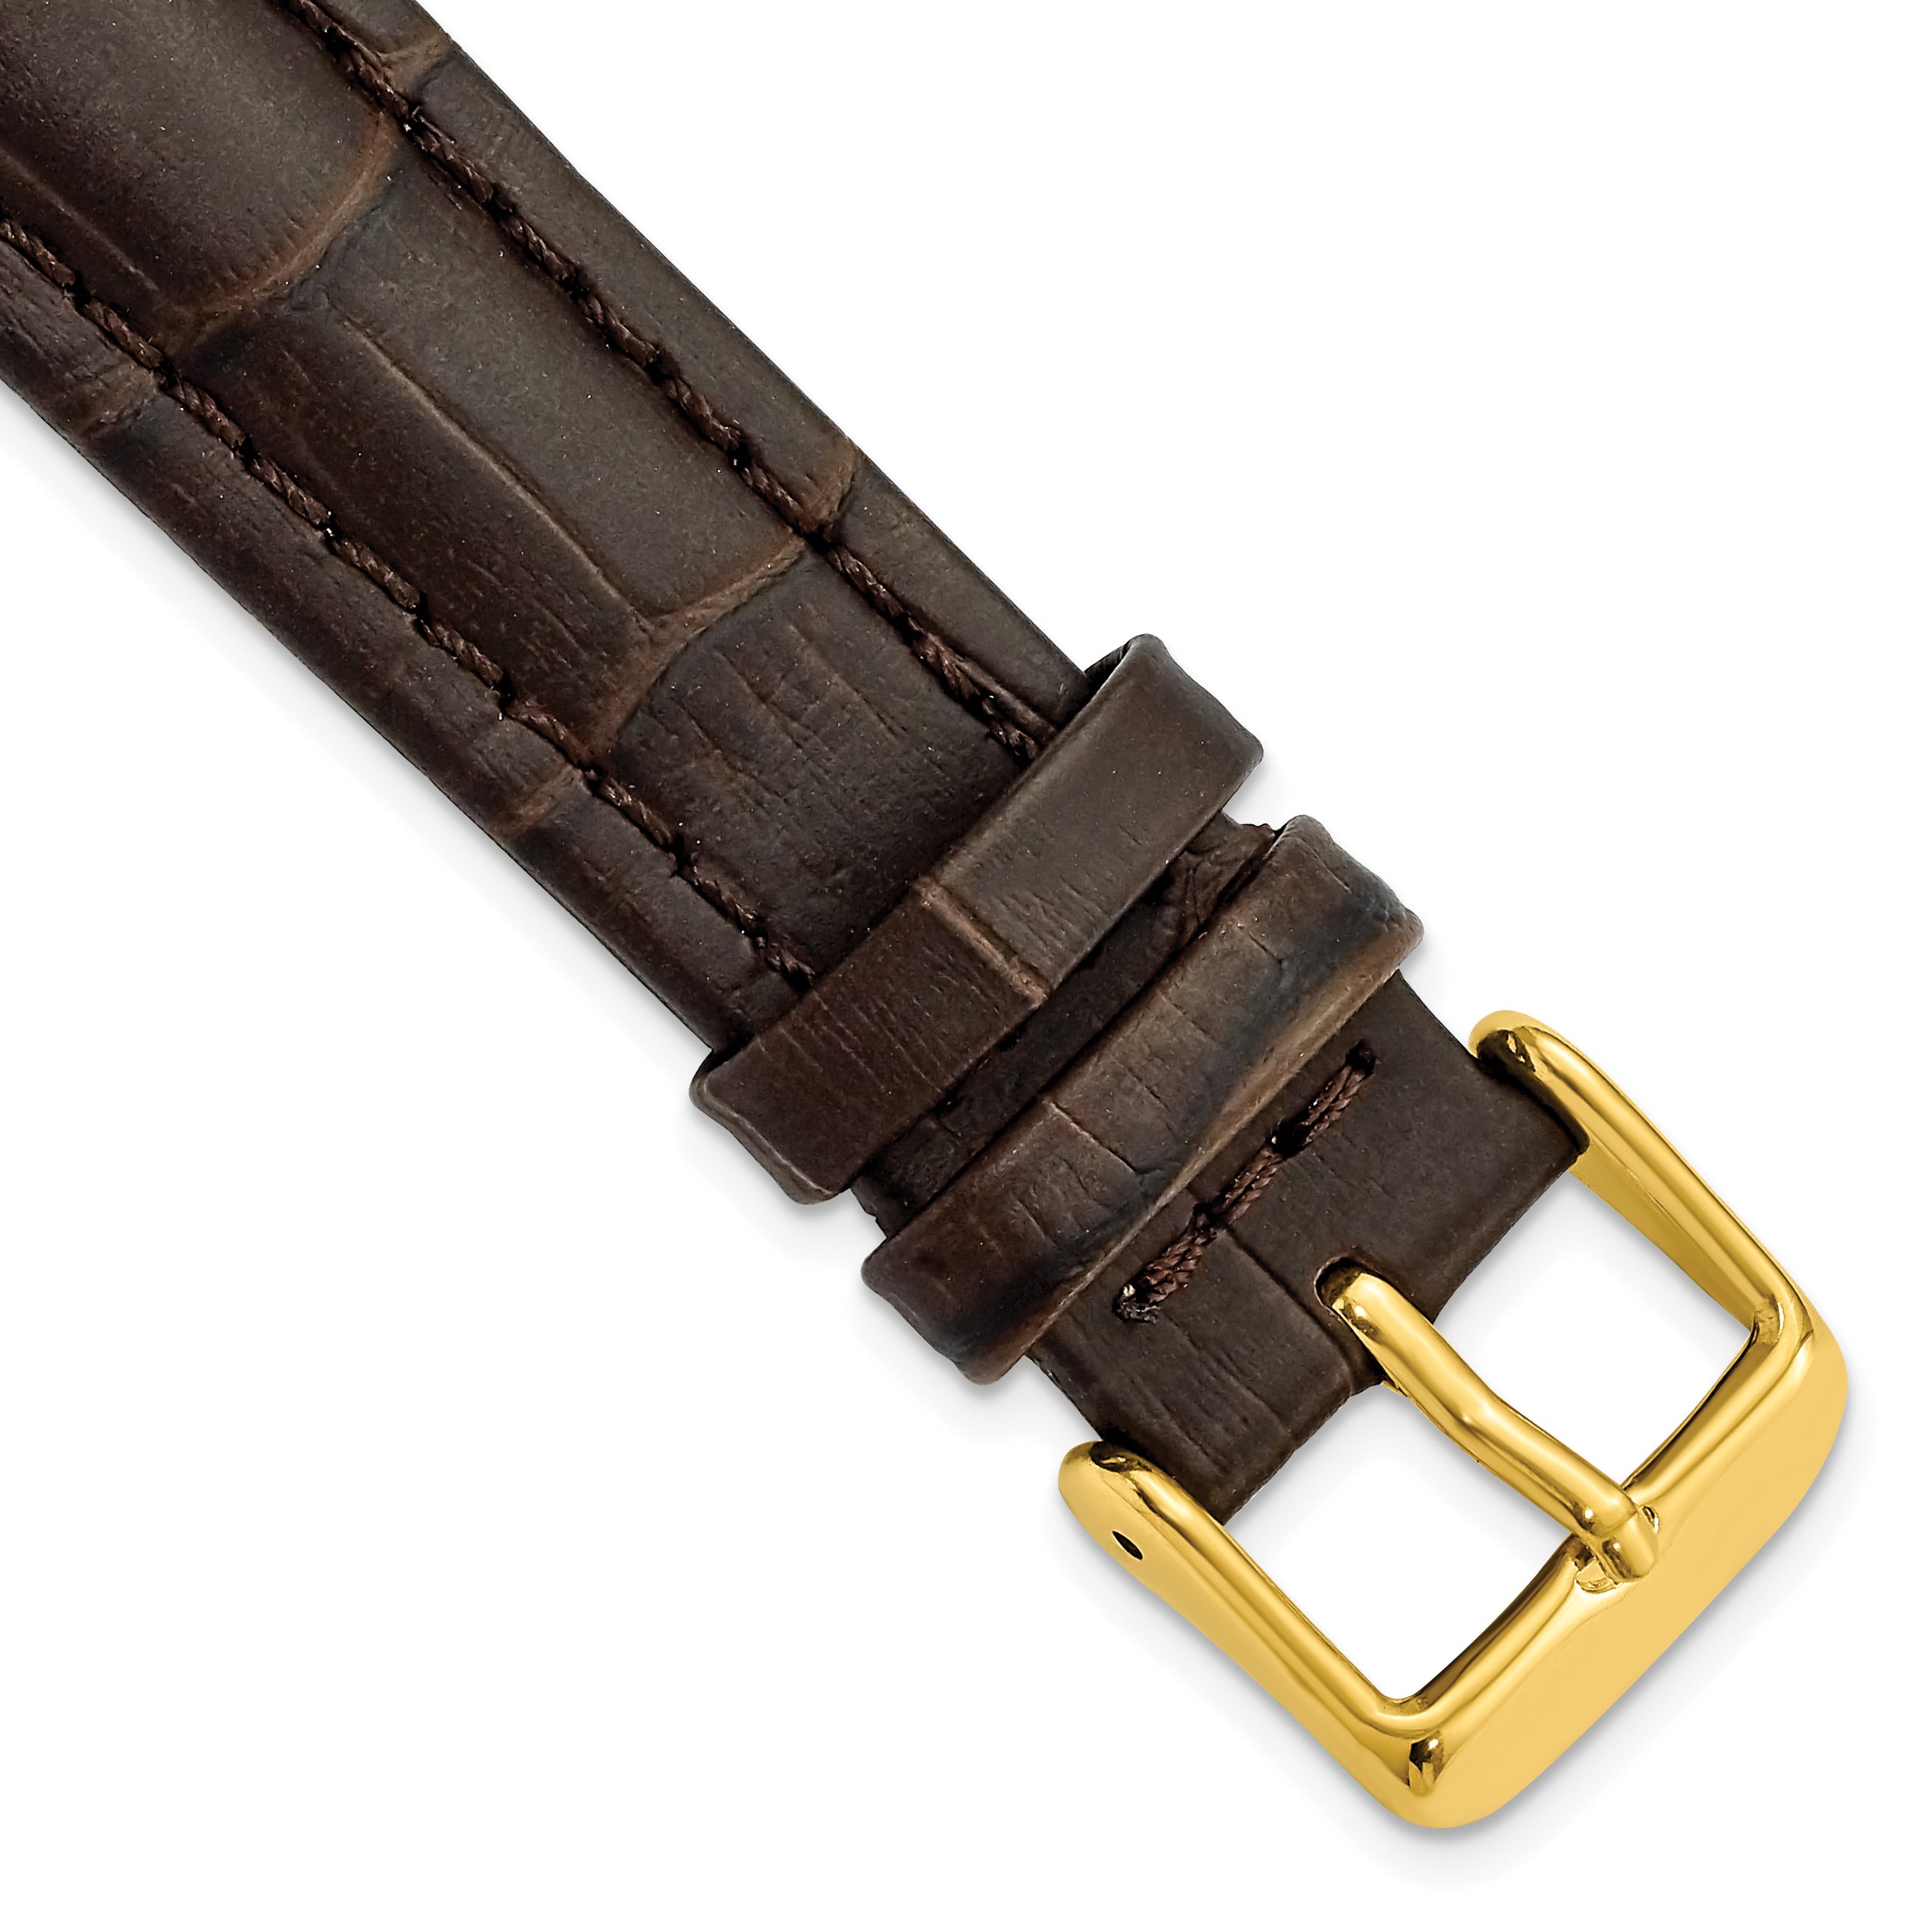 DeBeer 18mm Dark Brown Matte Alligator Grain Leather with Gold-tone Buckle 7.5 inch Watch Band